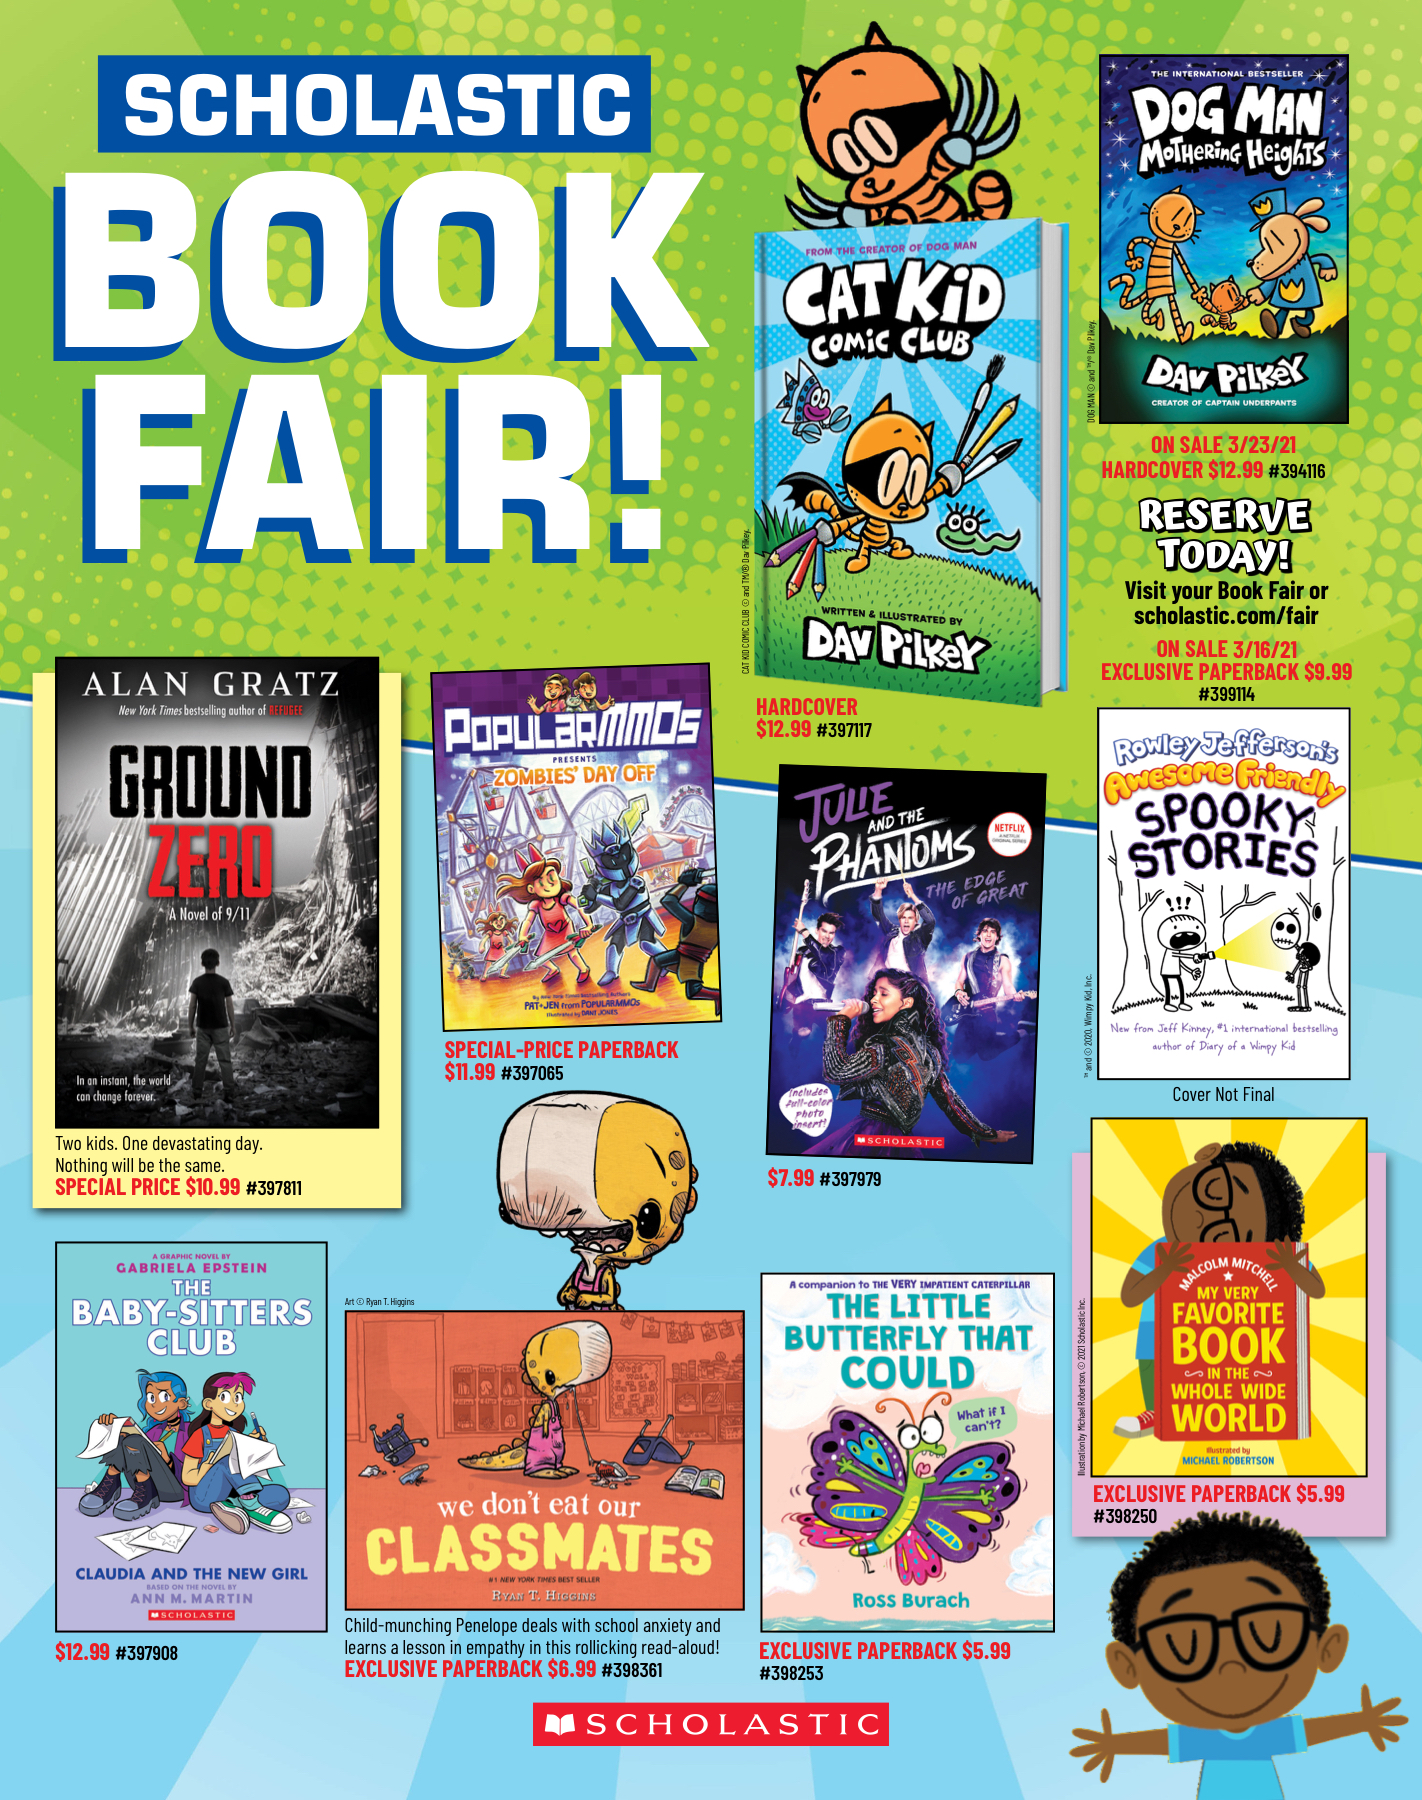 Scholastic Book Fair April 1-9, 2021 - Sam Case Elementary School